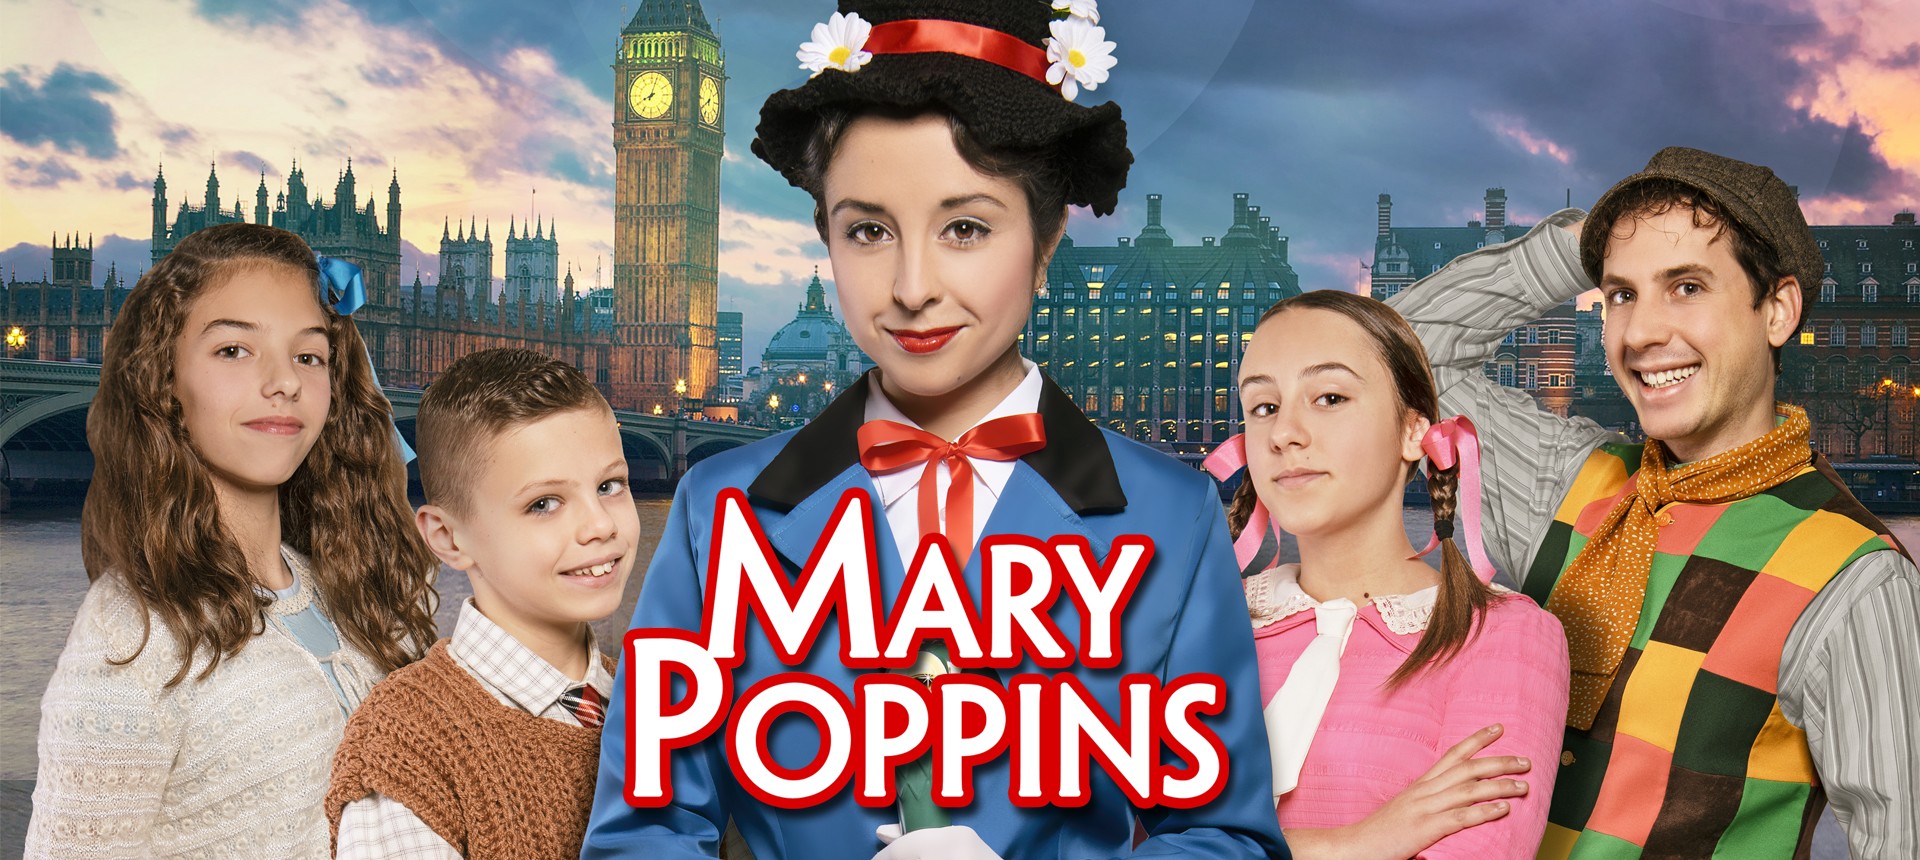 Viento del Este – Musical homenaje a Mary Poppins